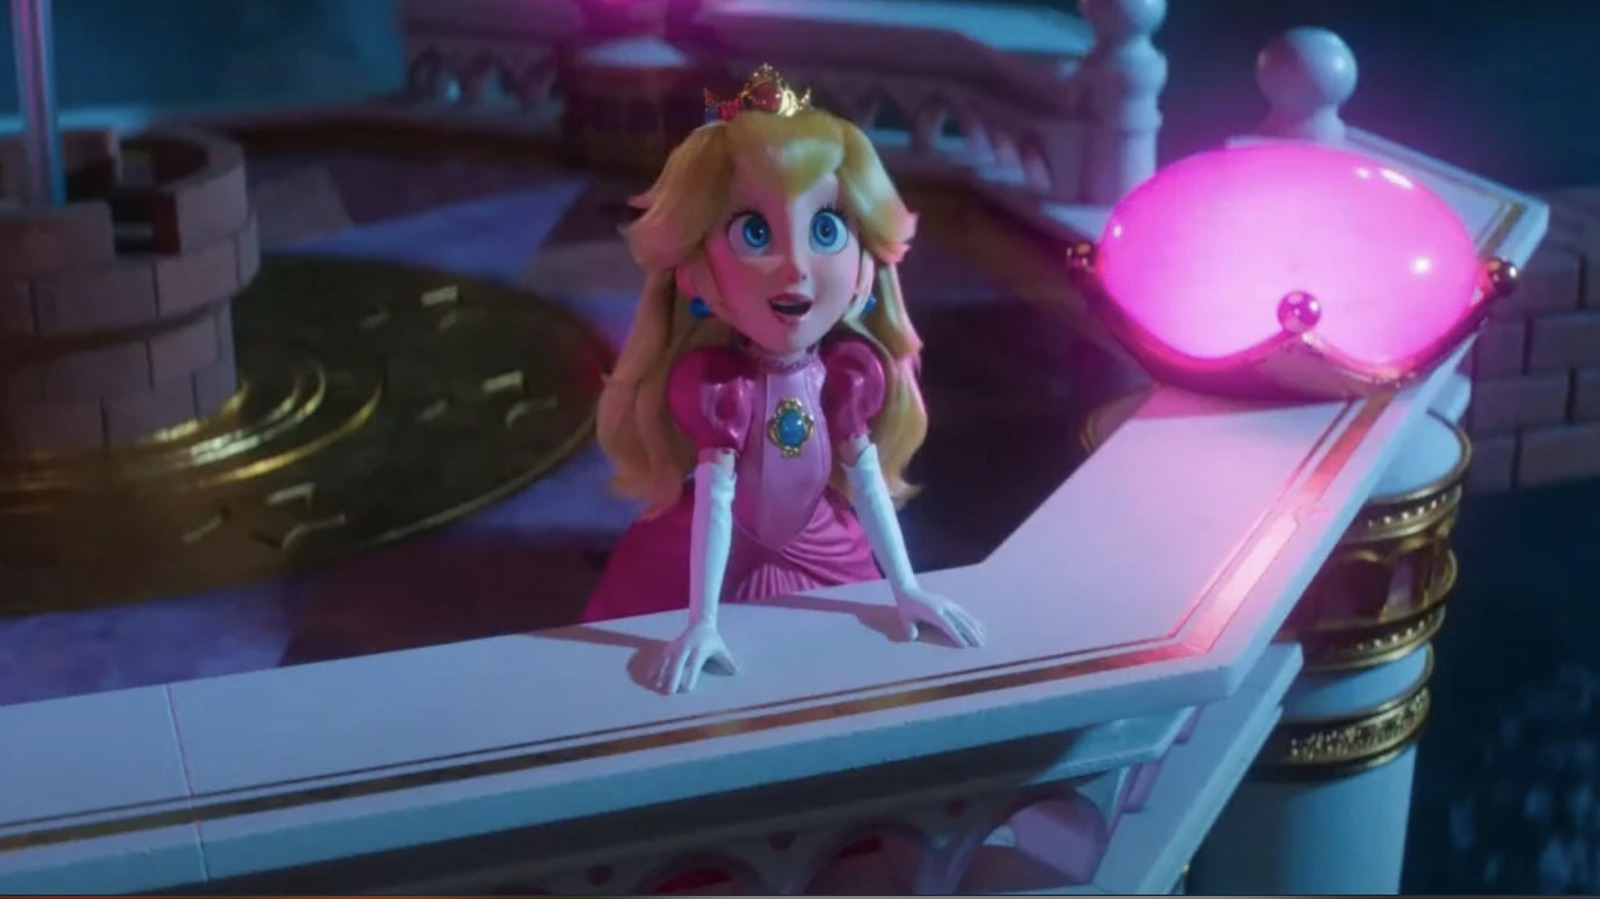 Mario MOVIE Director Confirms Princess Peach's Role Reversal